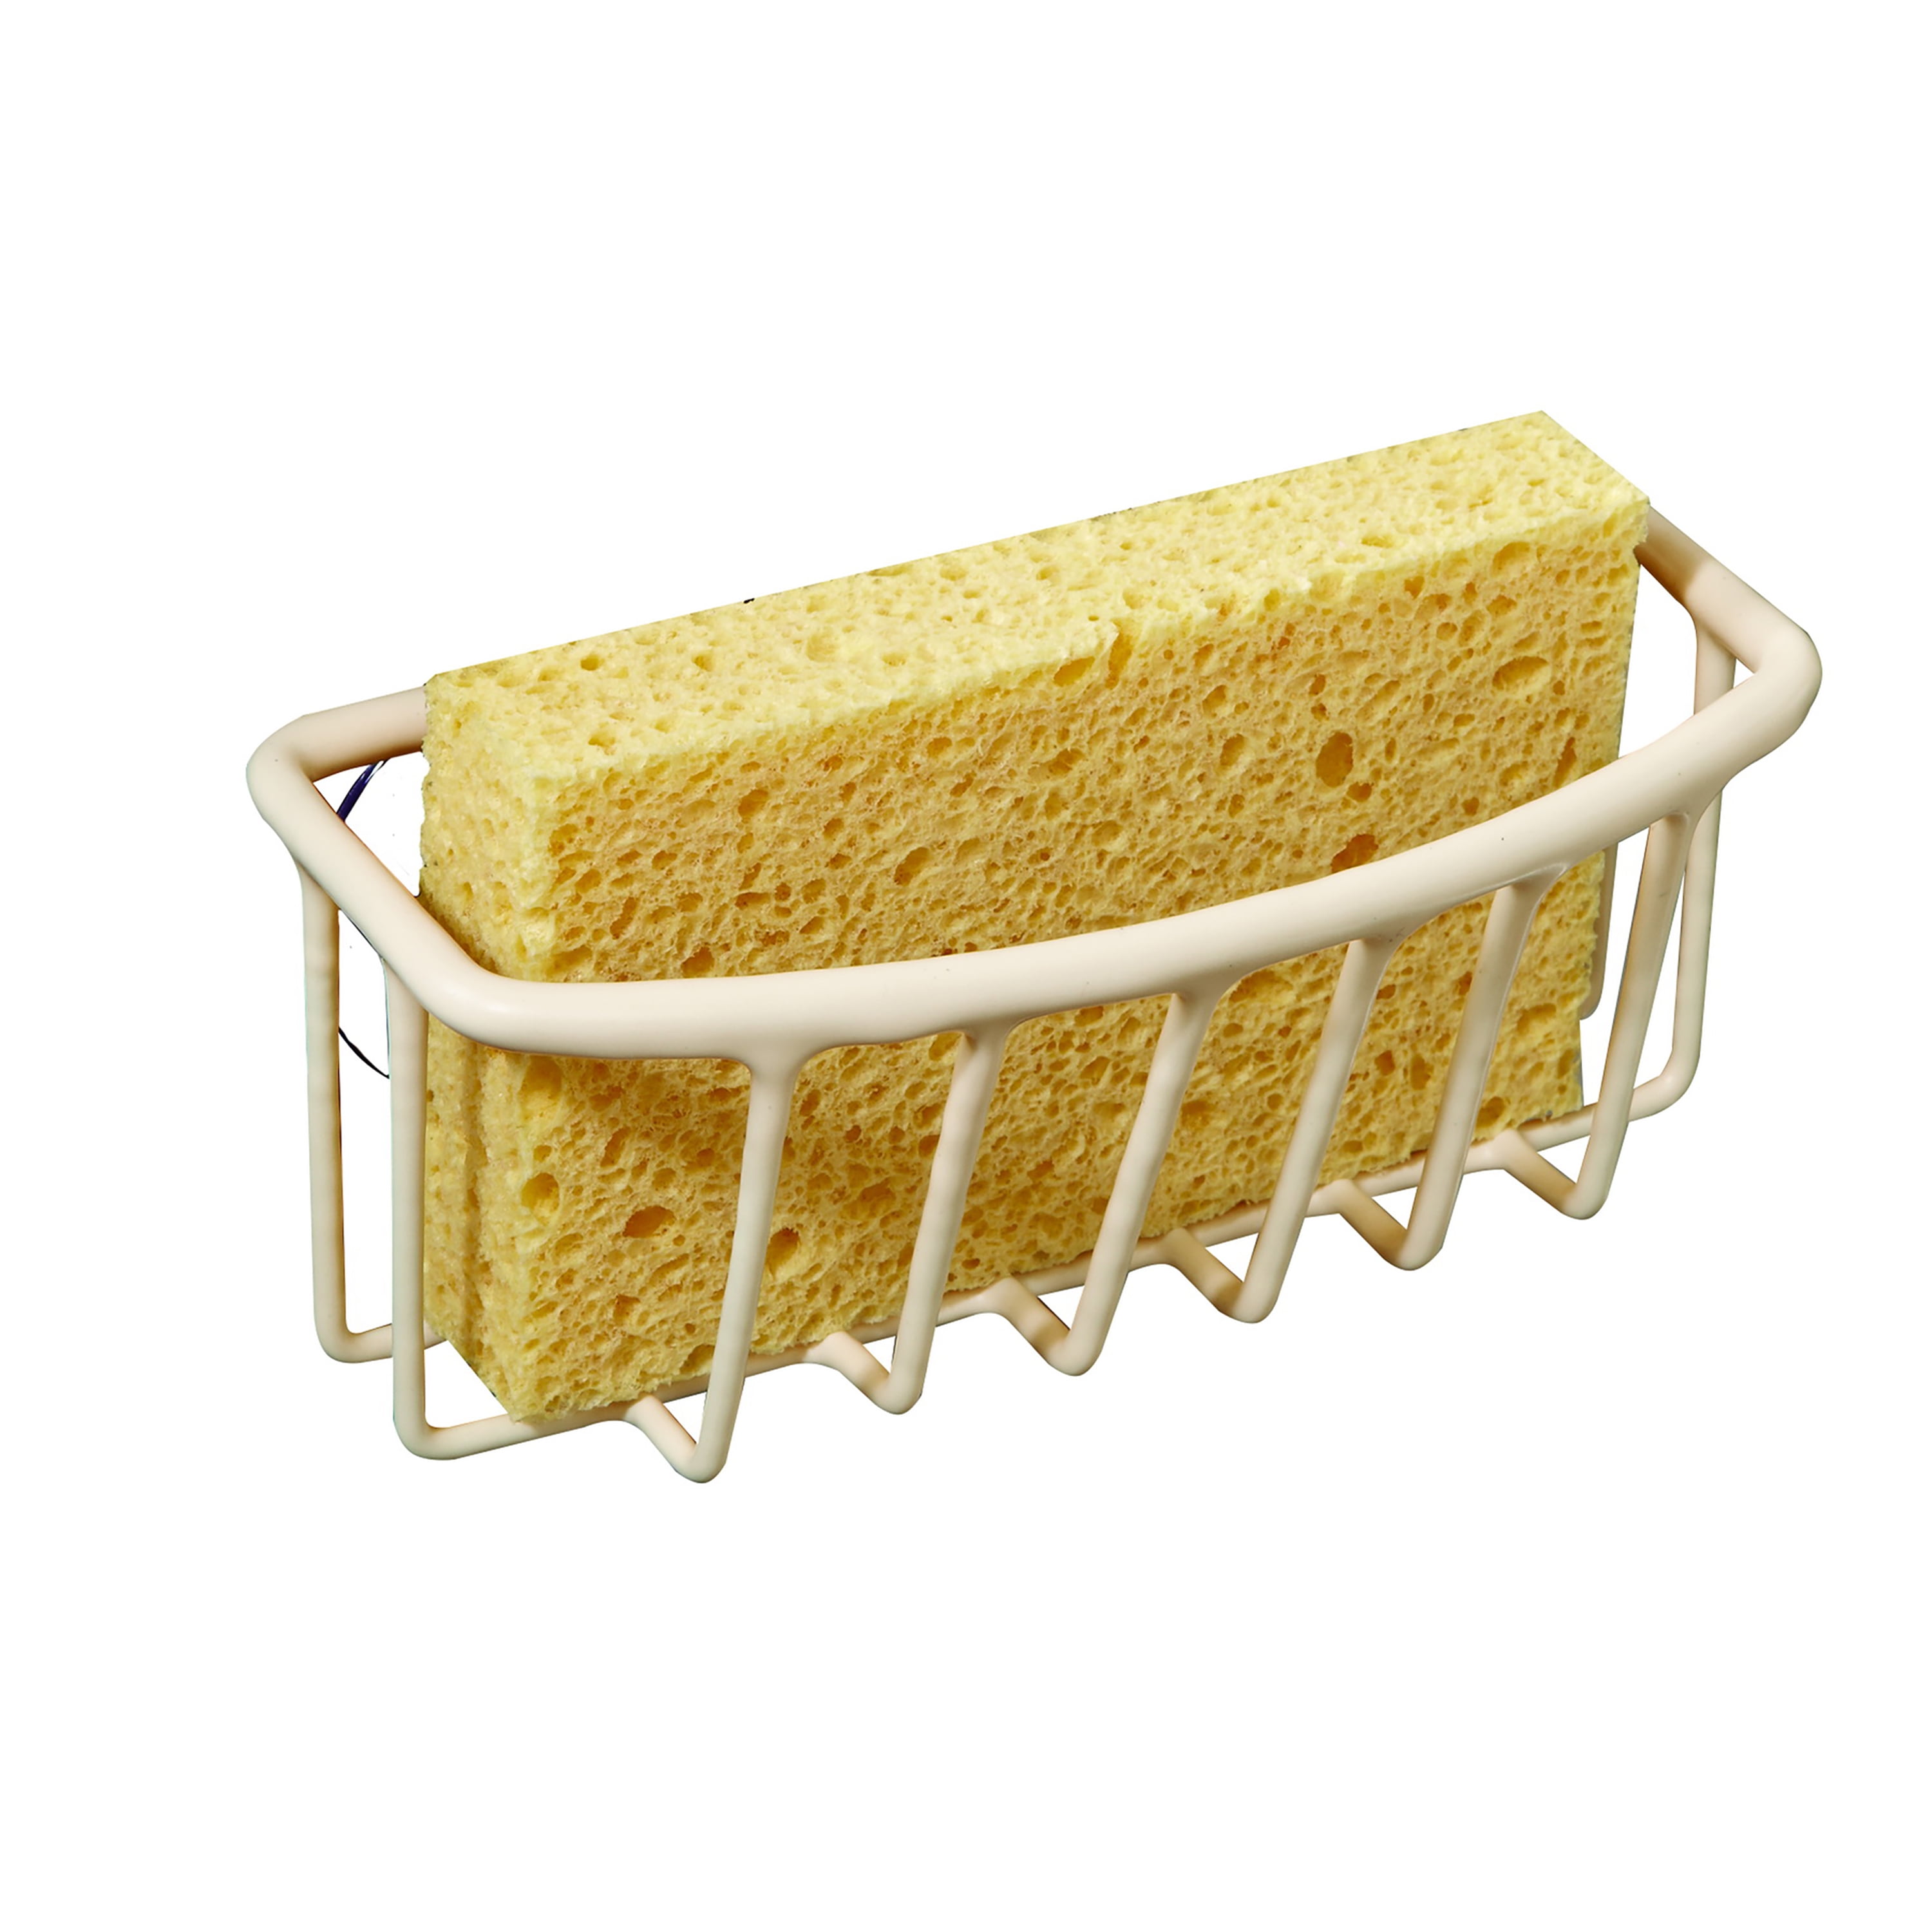 Silicone Sponge Holder for Kitchen Sink-2 PCS Thicker Heavier